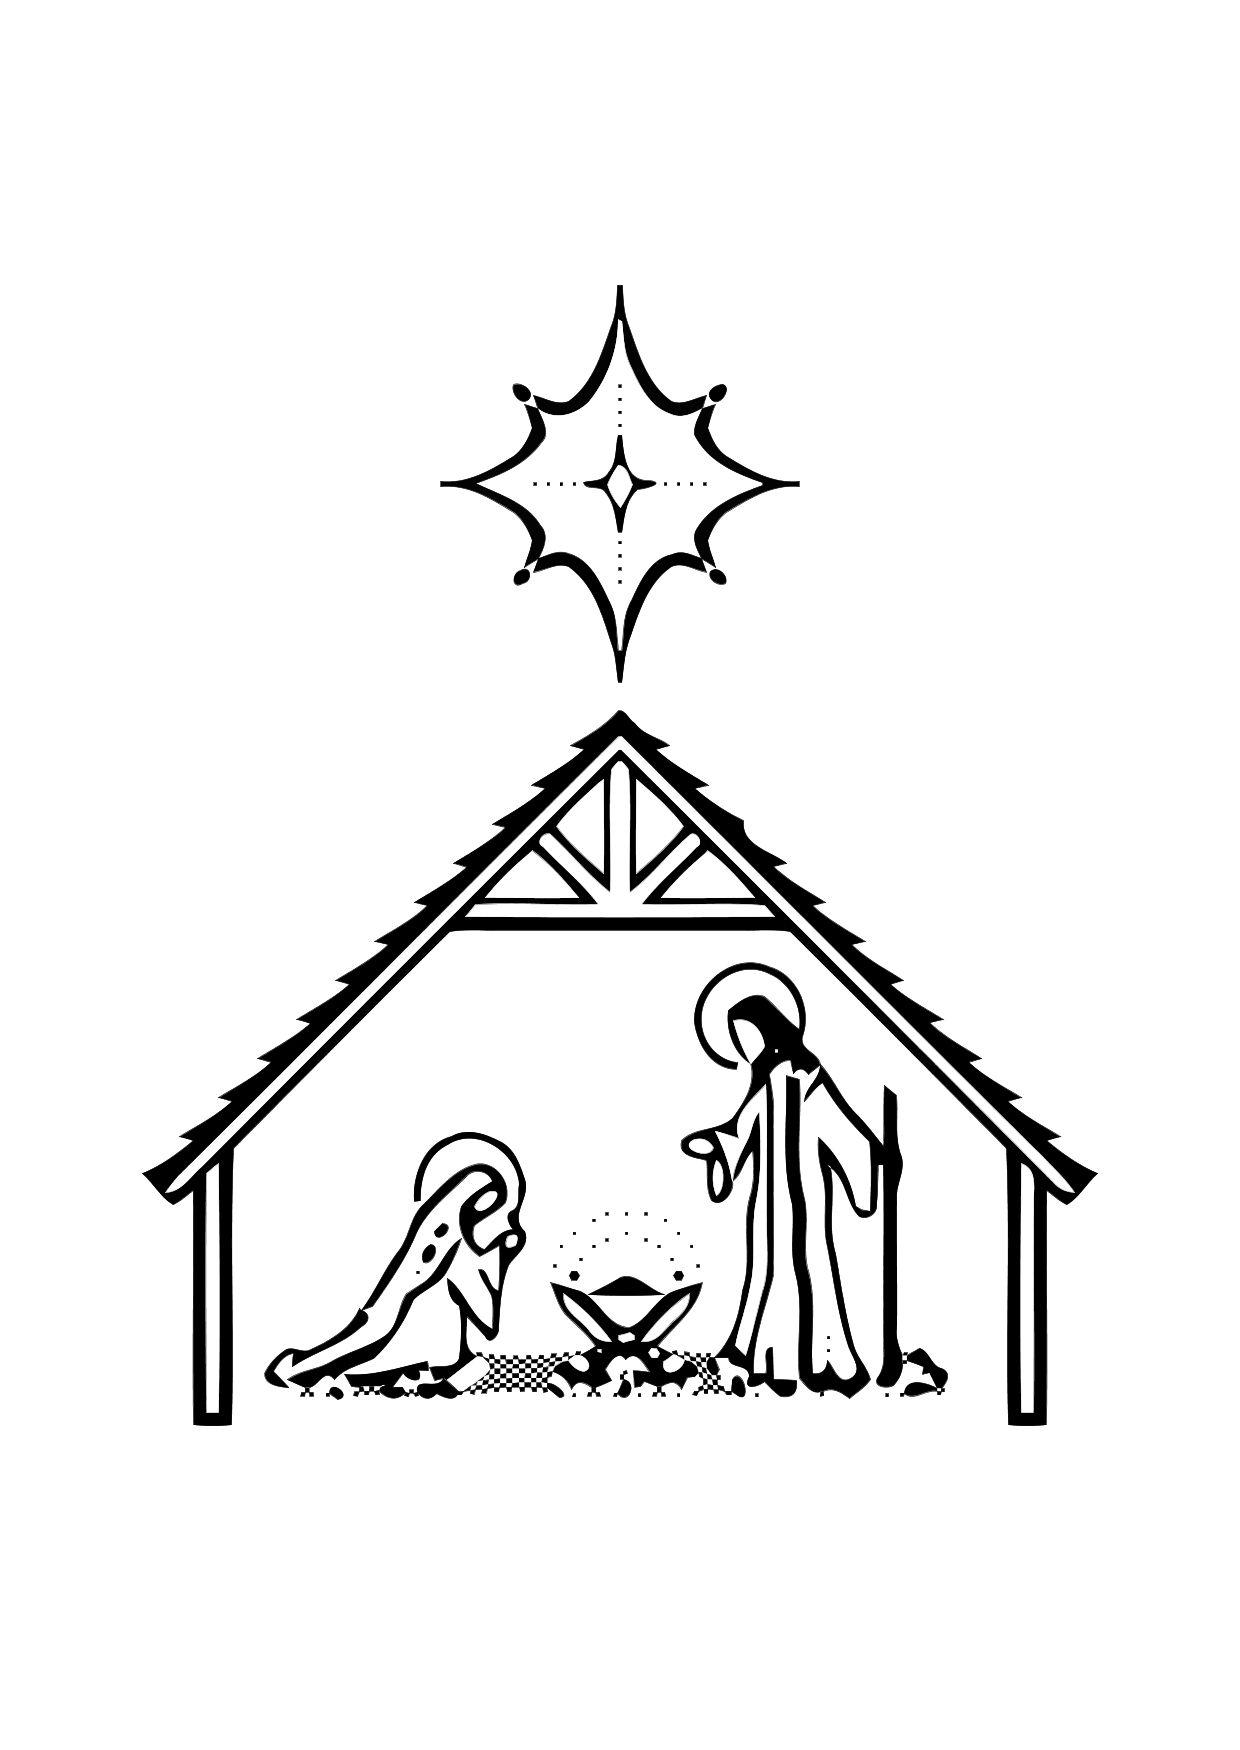 300+ Free Jesus Birth & Nativity Scene Images - Pixabay